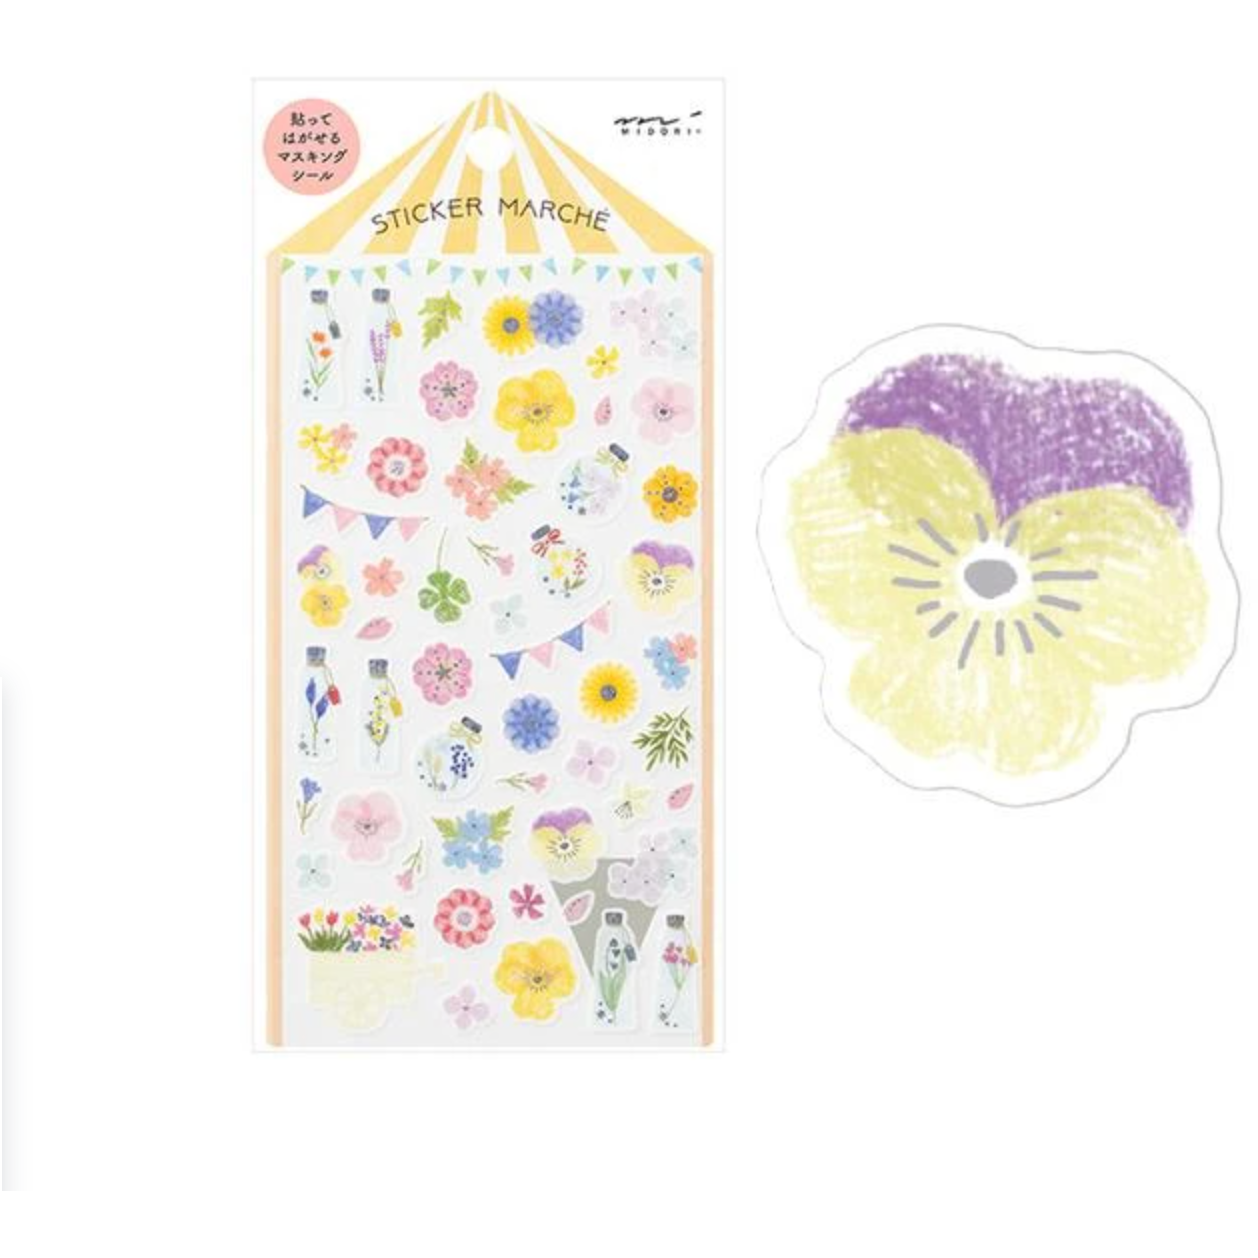 Marché Washi Sticker Sheet - Pressed Flower